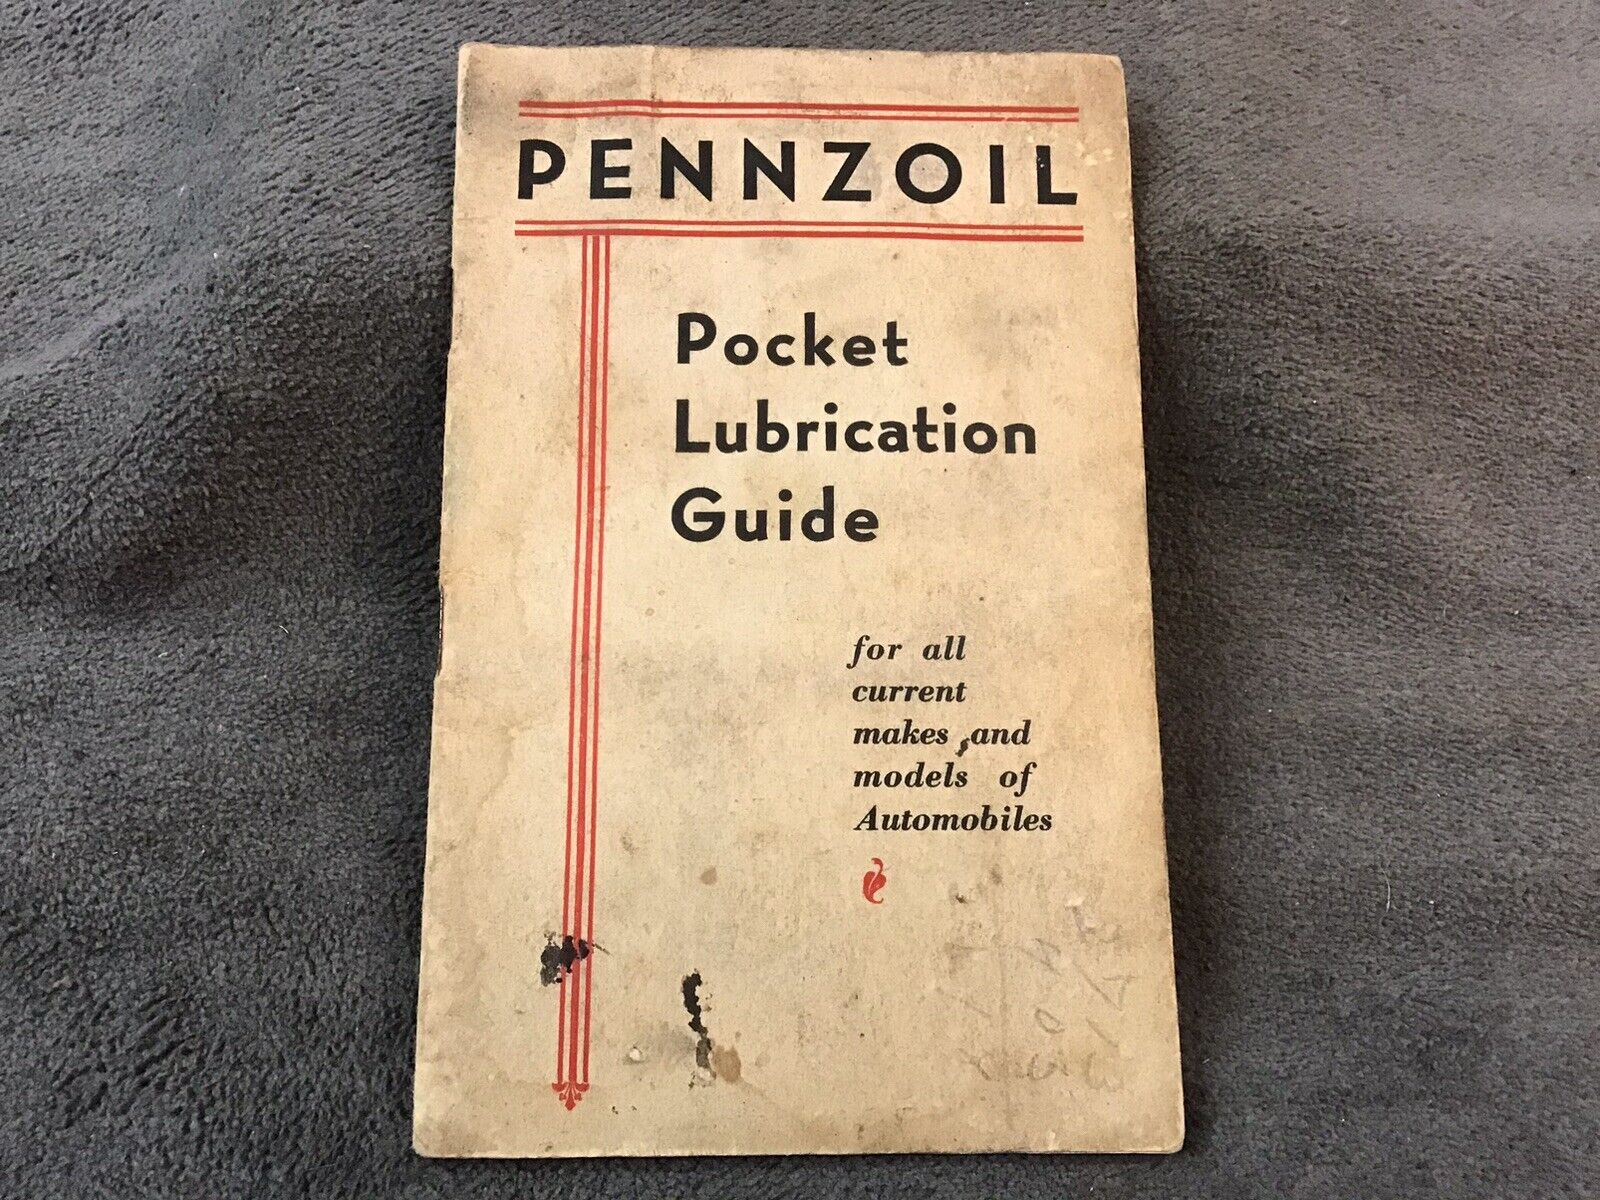 ANTIQUE ORIGINAL 1931 PENNZOIL POCKET LUBRICATION GUIDE -GAS OIL SERVICE STATION